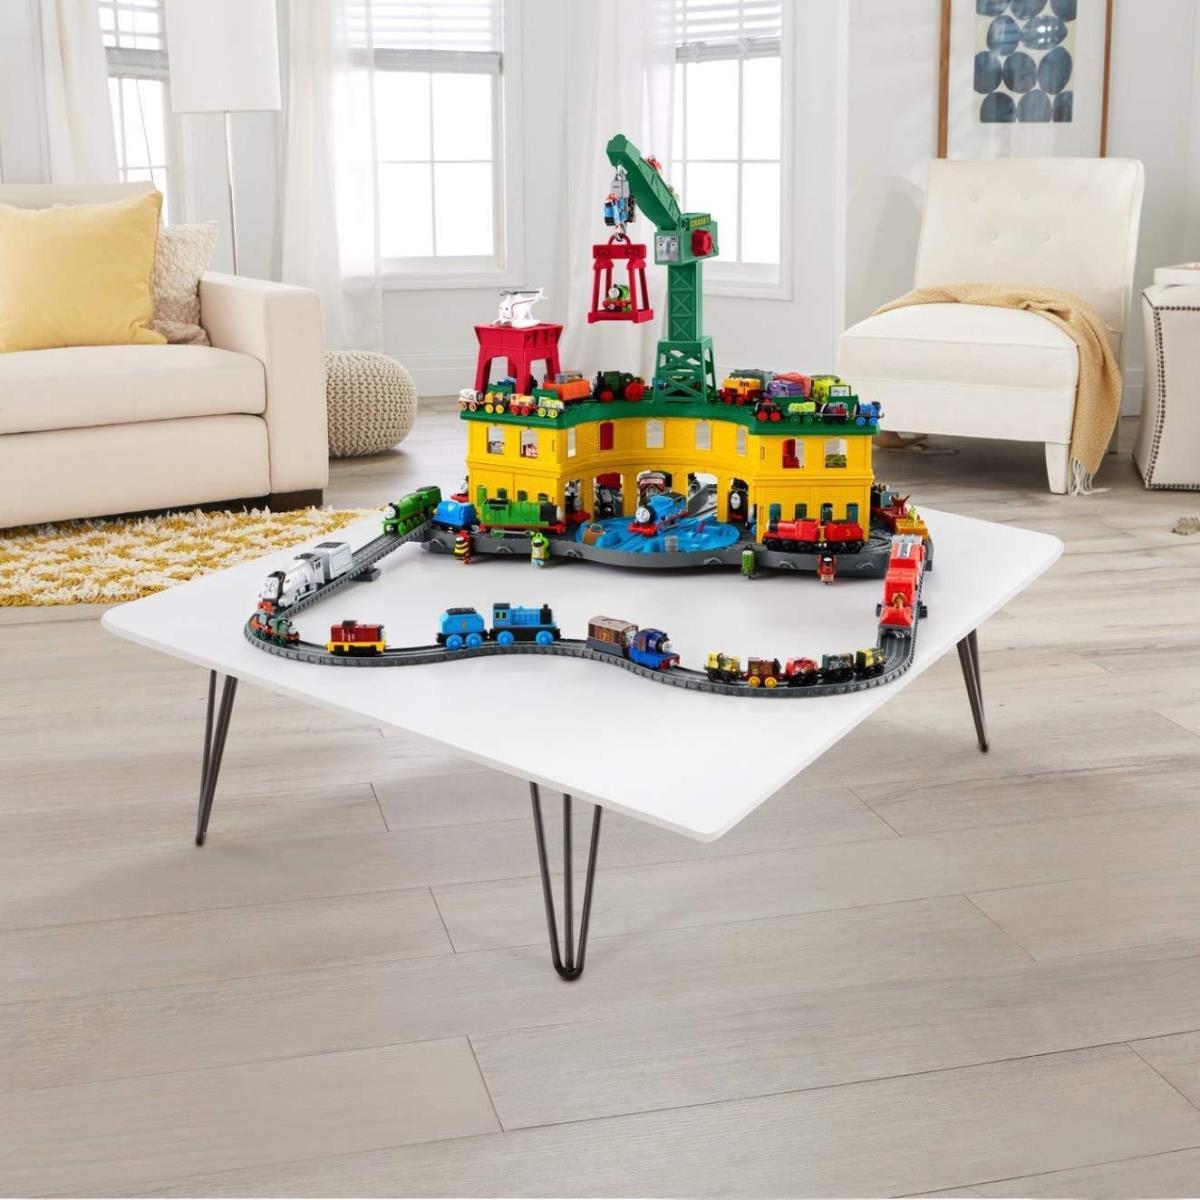 Home Floor Kids Toy Game Play Toddler Hobbies Friends Super Station Fits Design